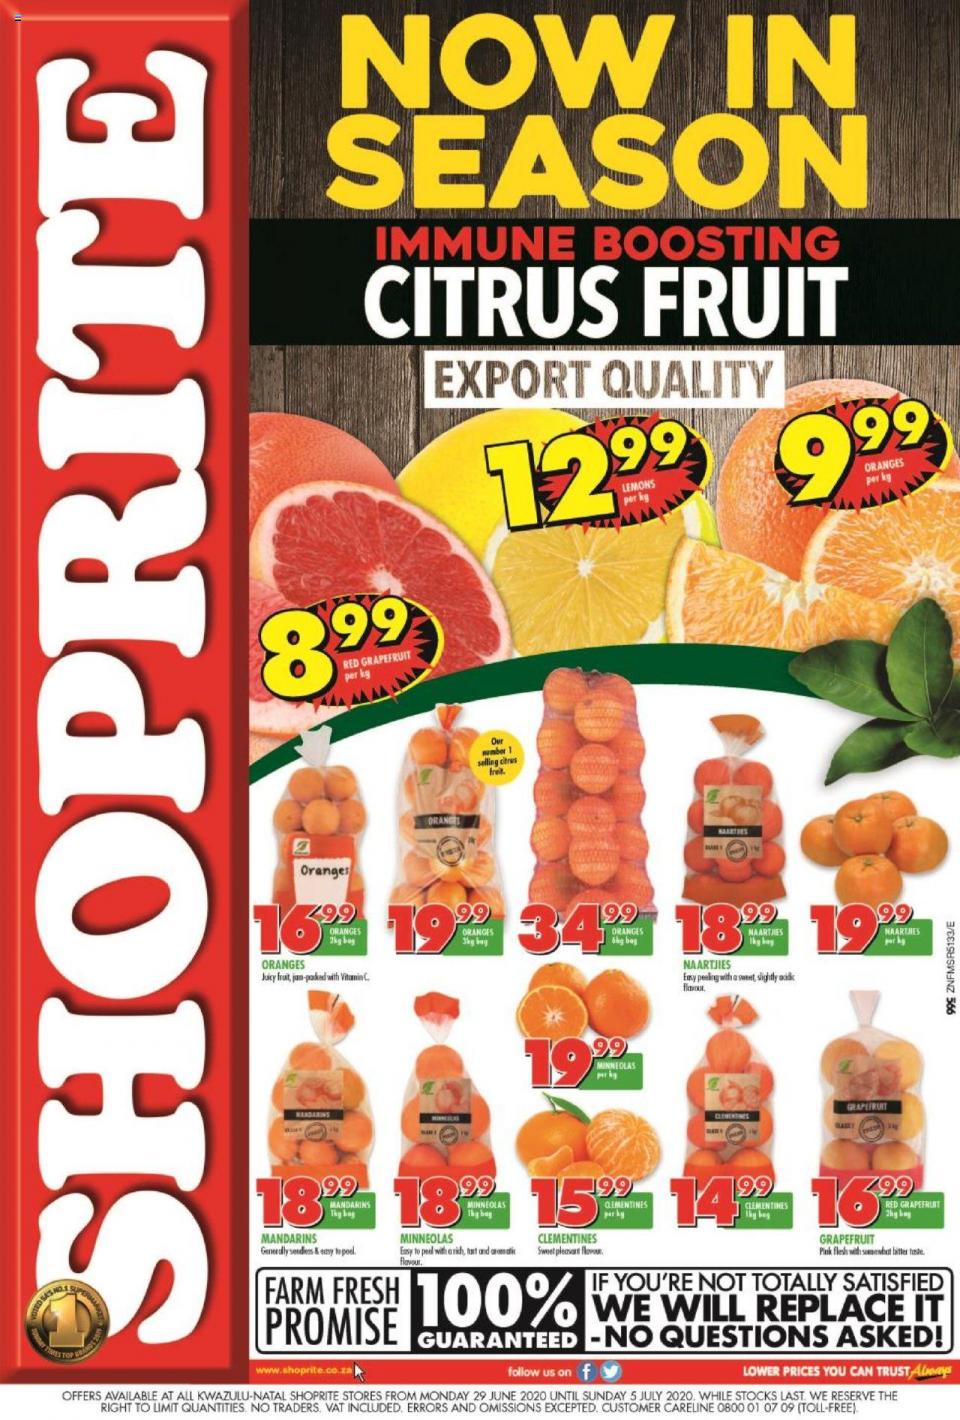 Shoprite Specials Citrus Fruit Promotion 29 June 2020 | KwaZulu-Natal